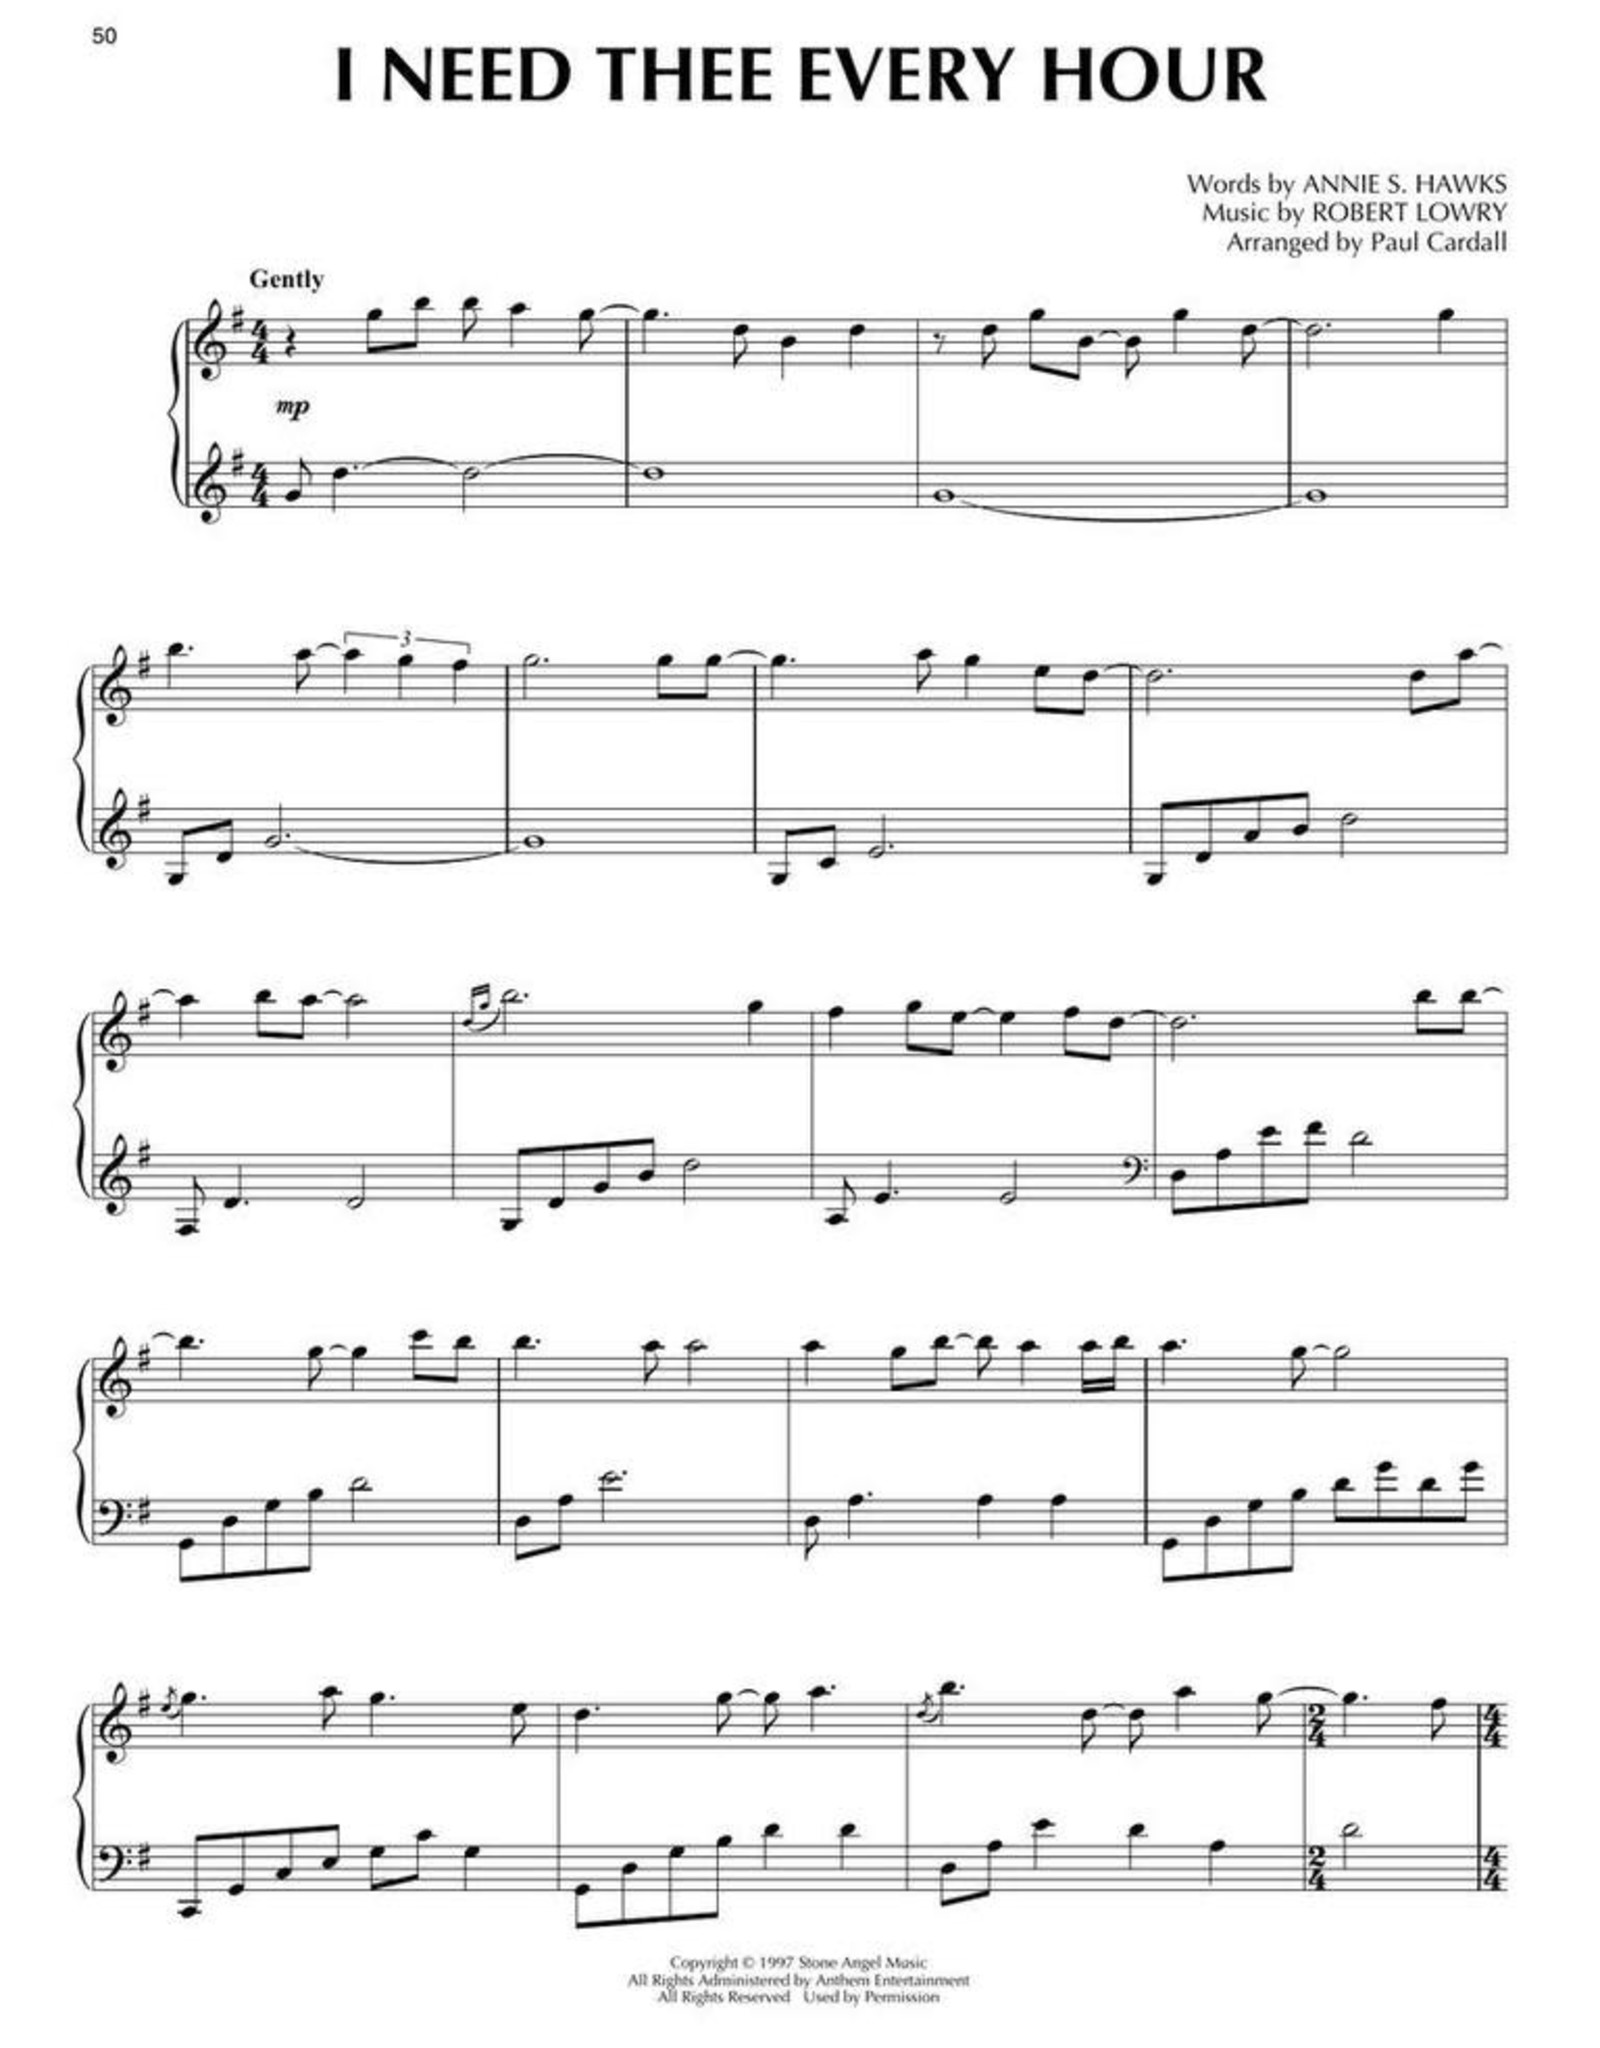 Hal Leonard Paul Cardall - Hymns Collection - 29 Hymn Arrangements